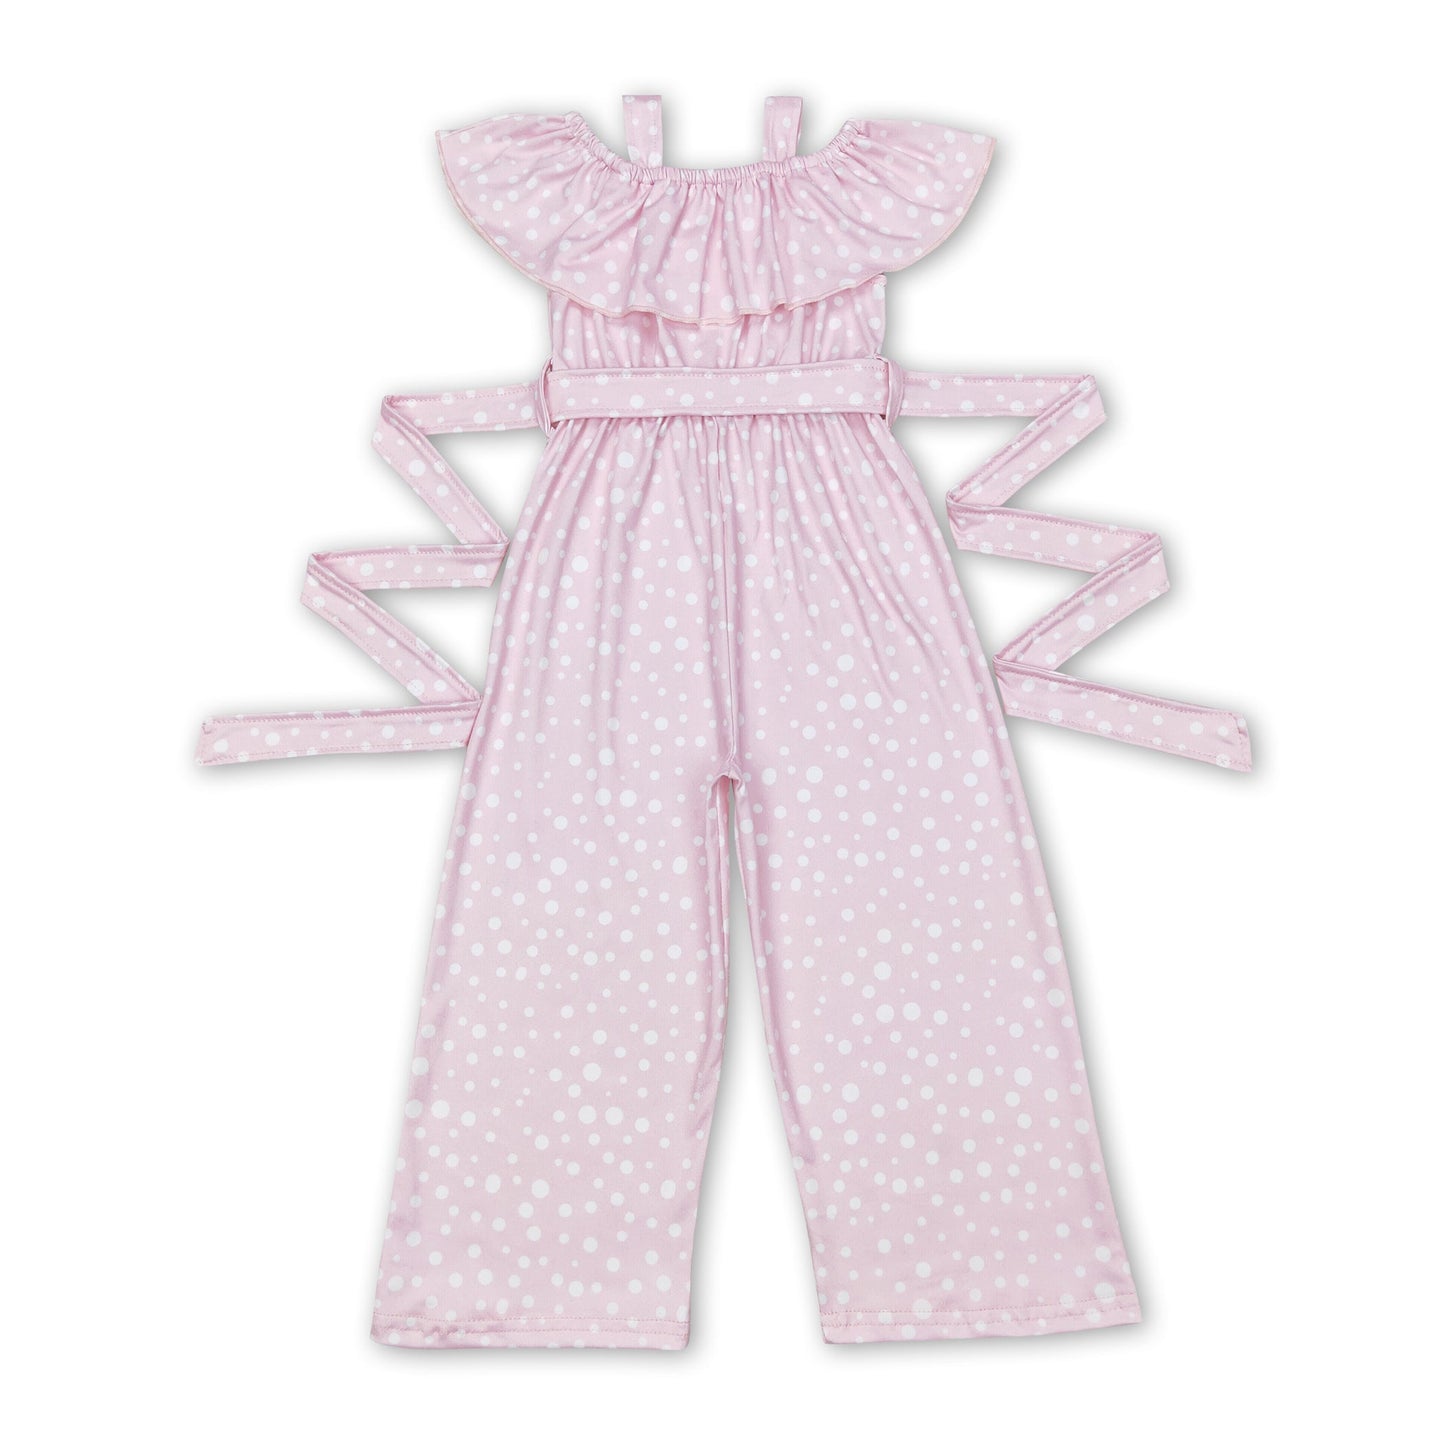 Sleeveless pink polka dots baby girls overalls